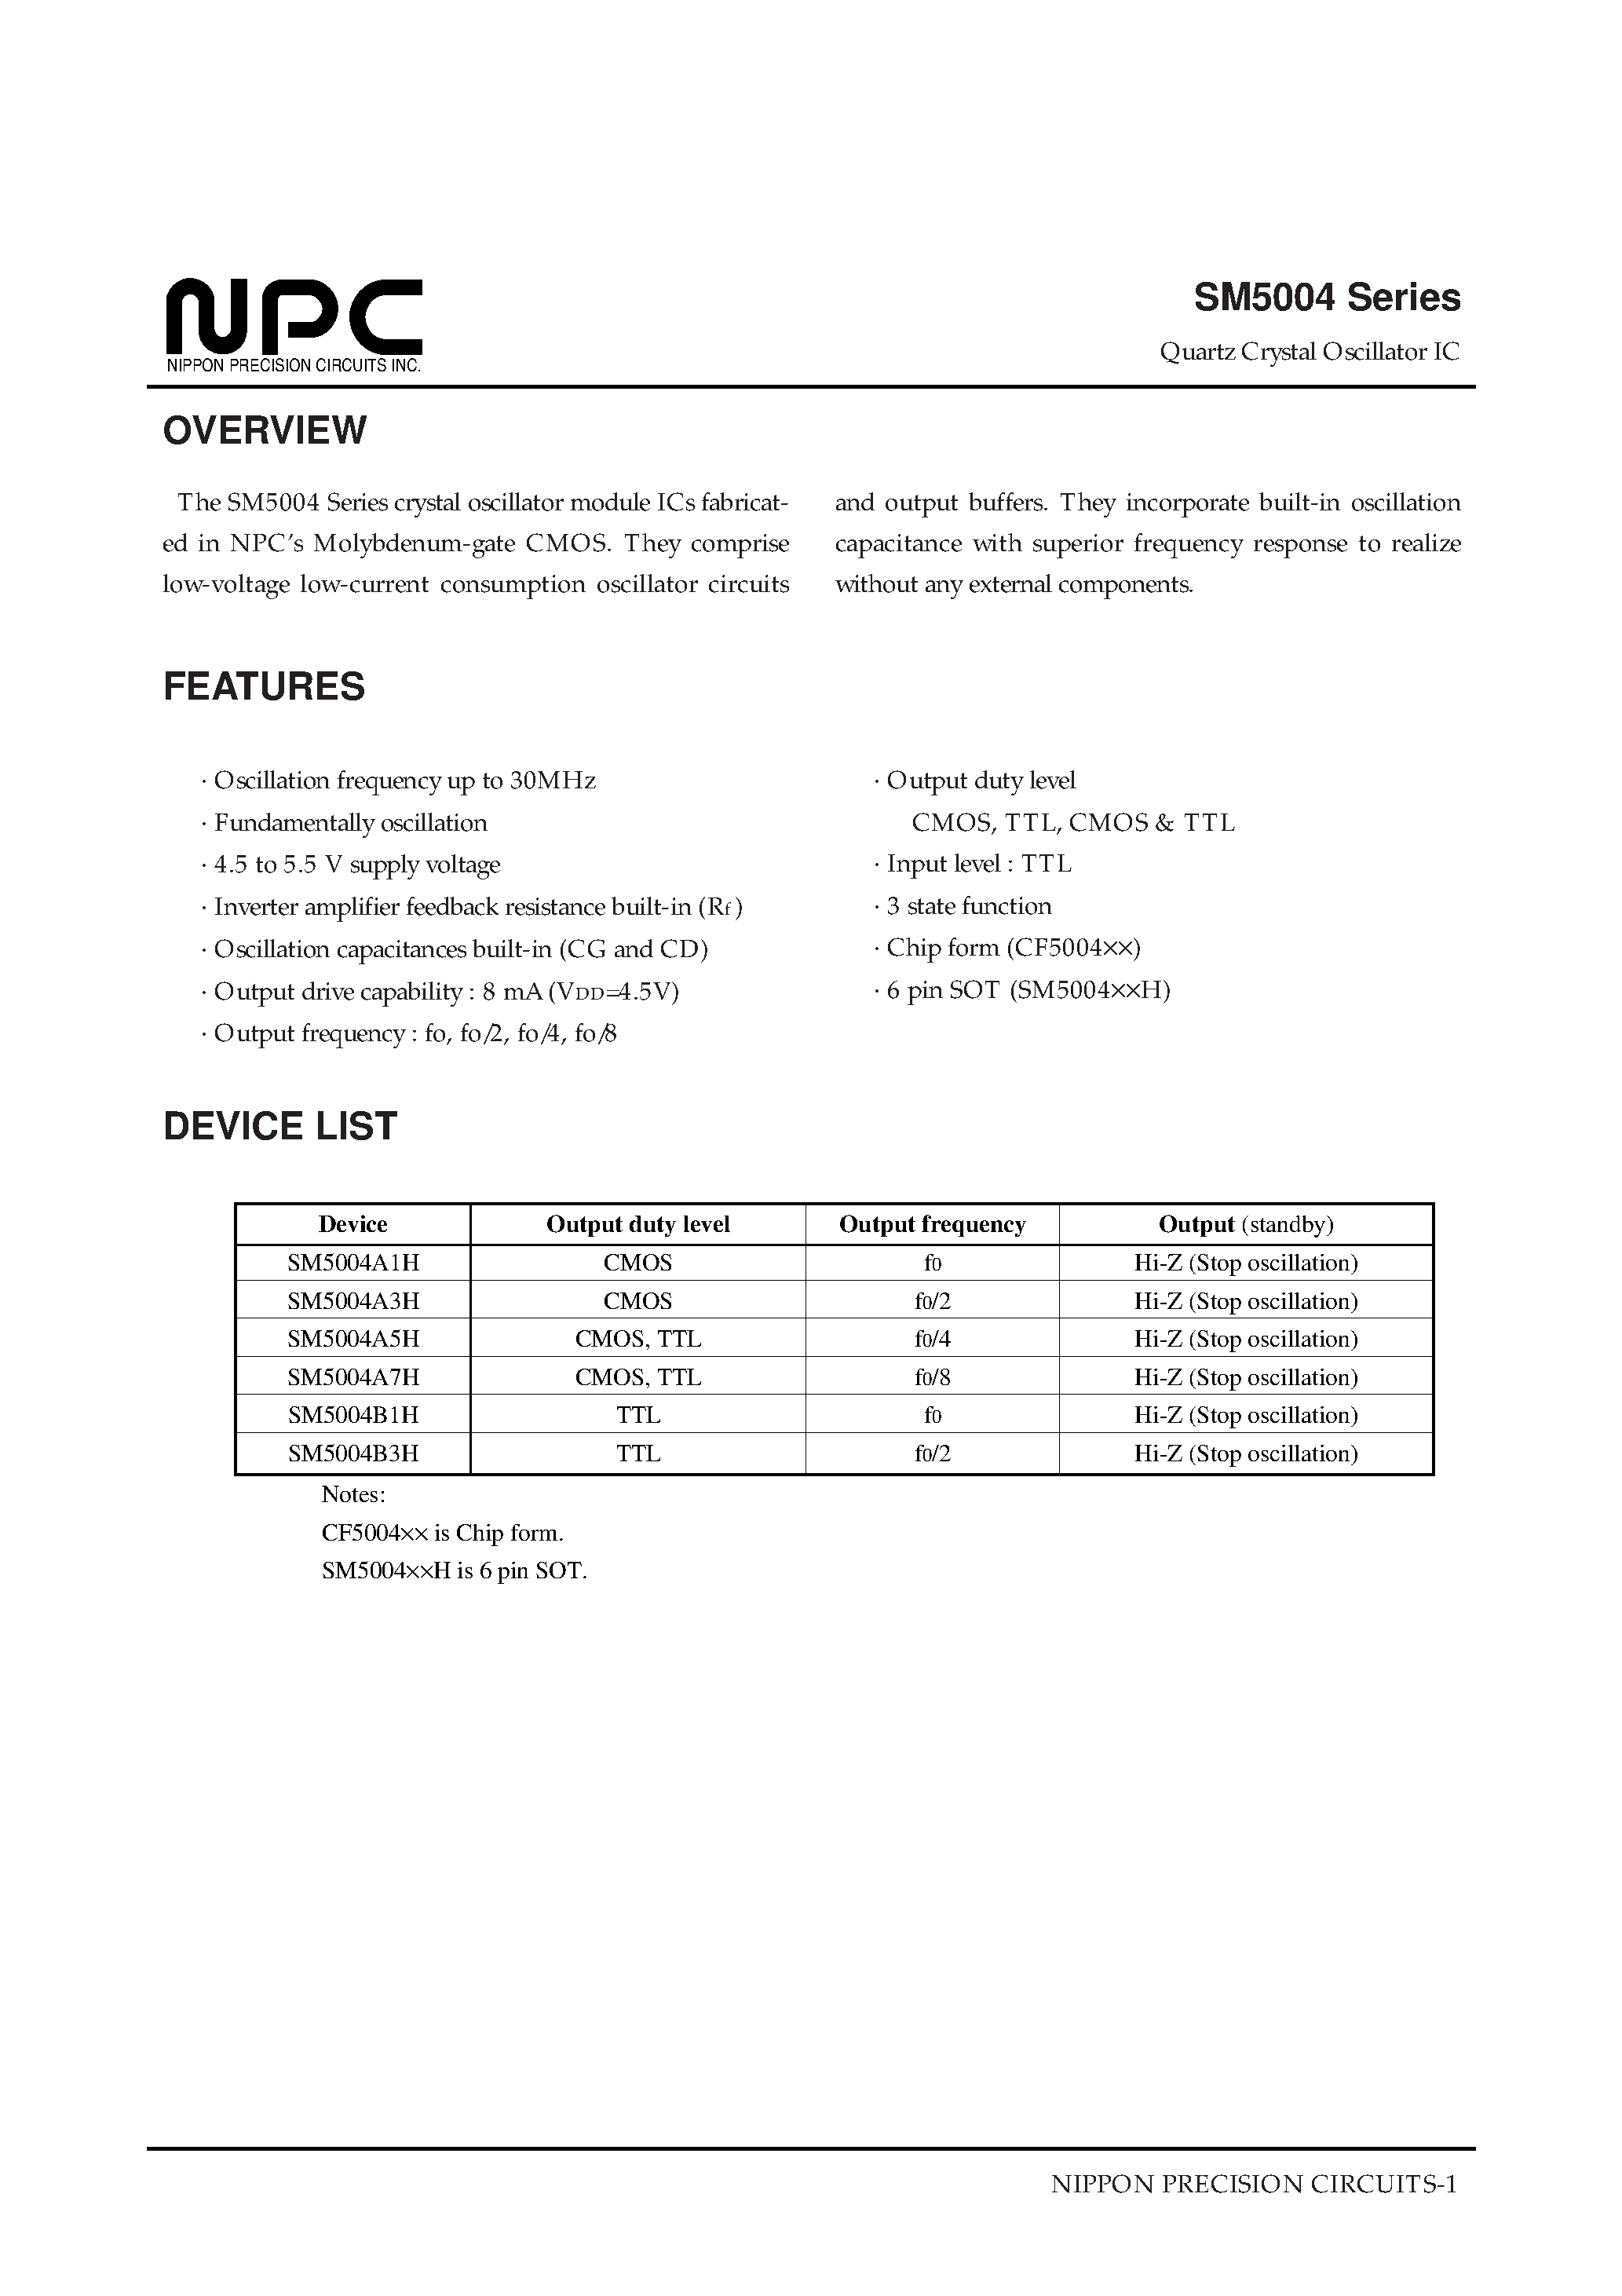 Datasheet SM5004B3H - Quartz Crystal Oscillator IC page 1